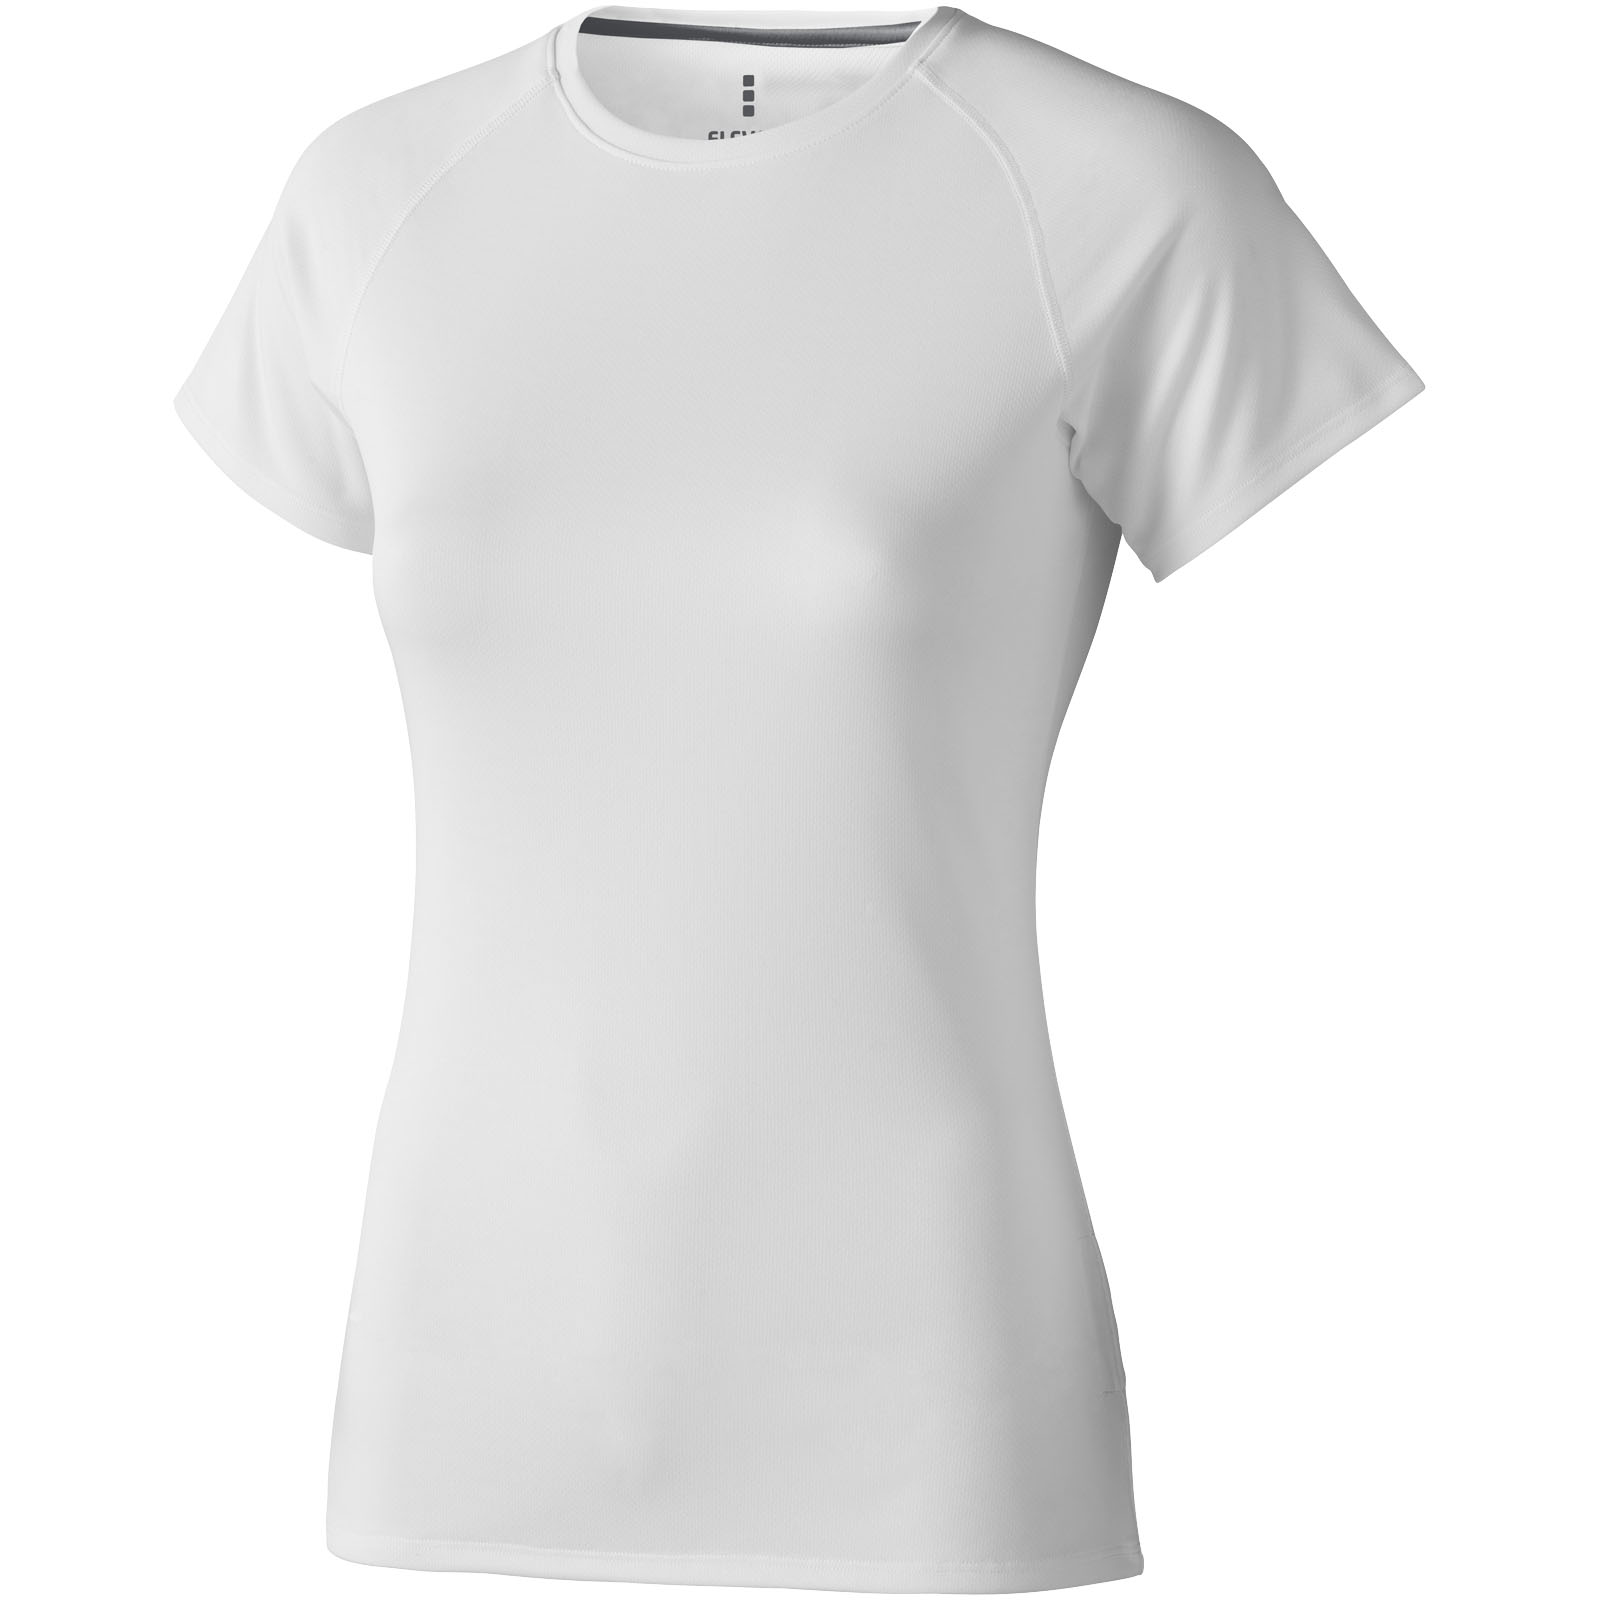 T-shirts - Niagara short sleeve women's cool fit t-shirt